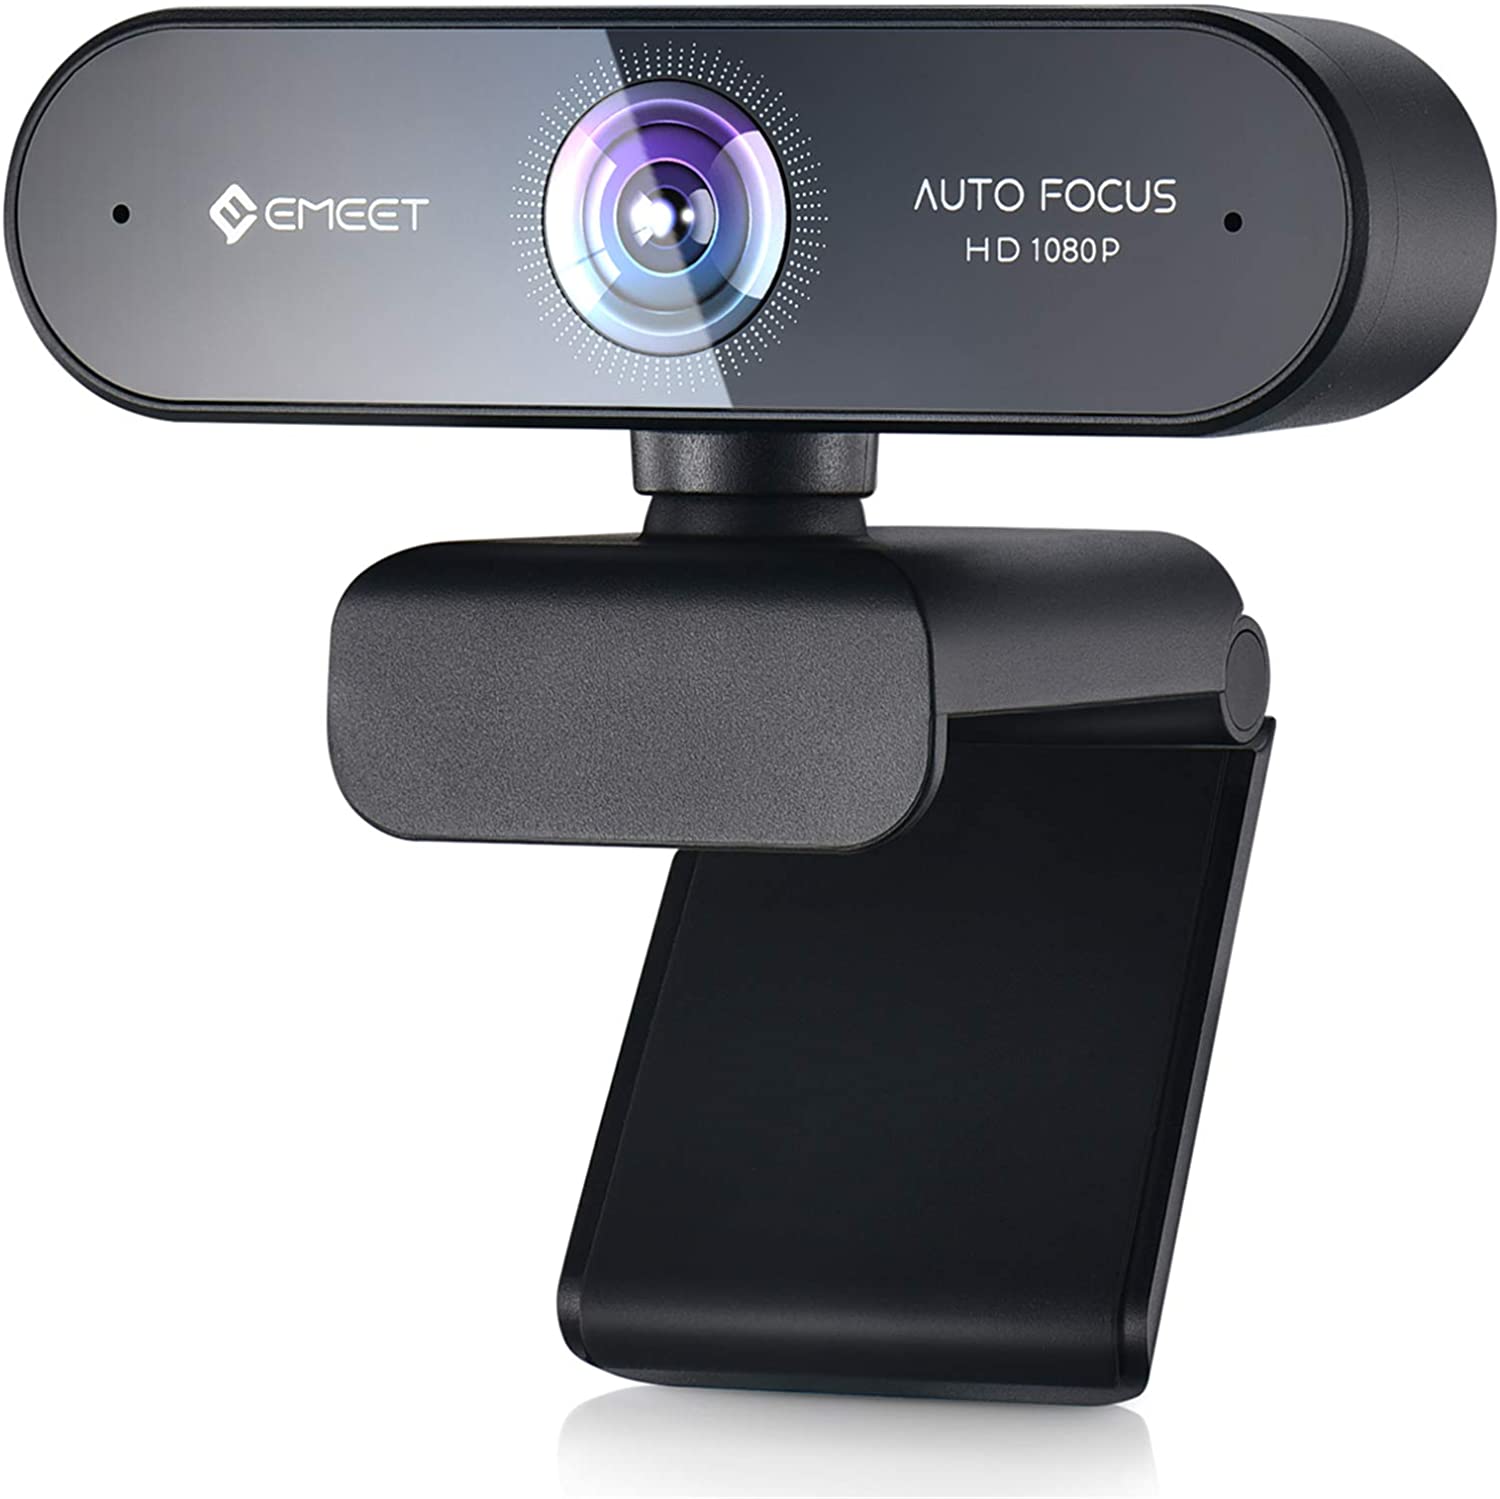 NOVA 1080P Autofocus Webcam with Noise Reduction Mics $25 + Free shipping